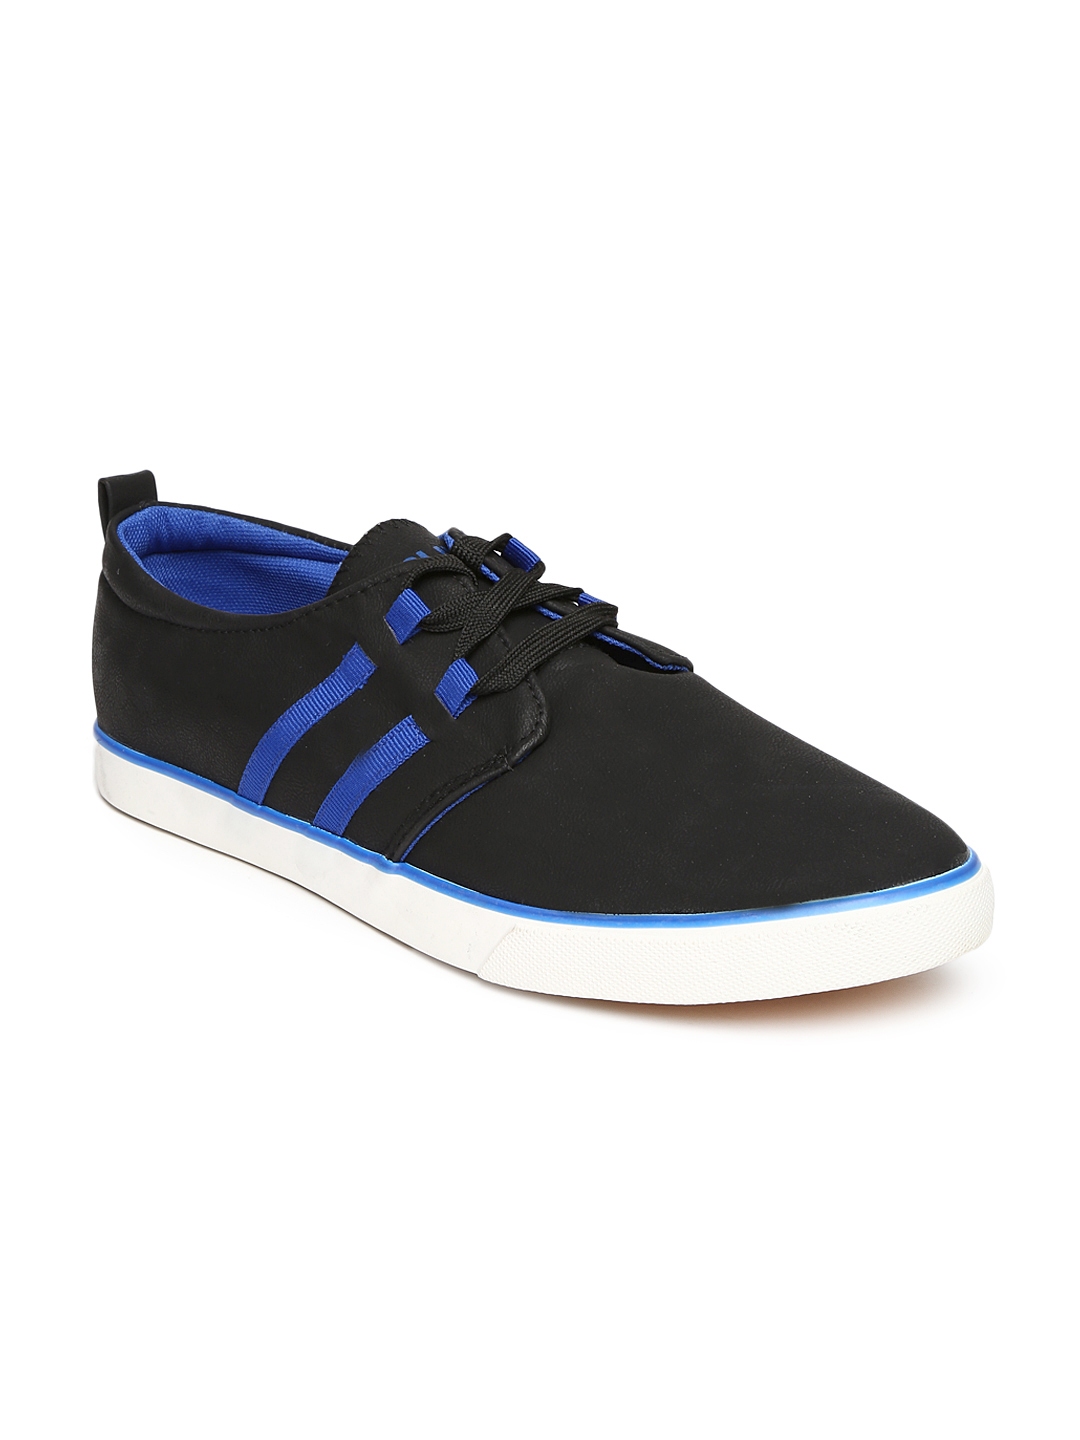 Buy Duke Men Black Casual Shoes - Casual Shoes for Men 837968 | Myntra